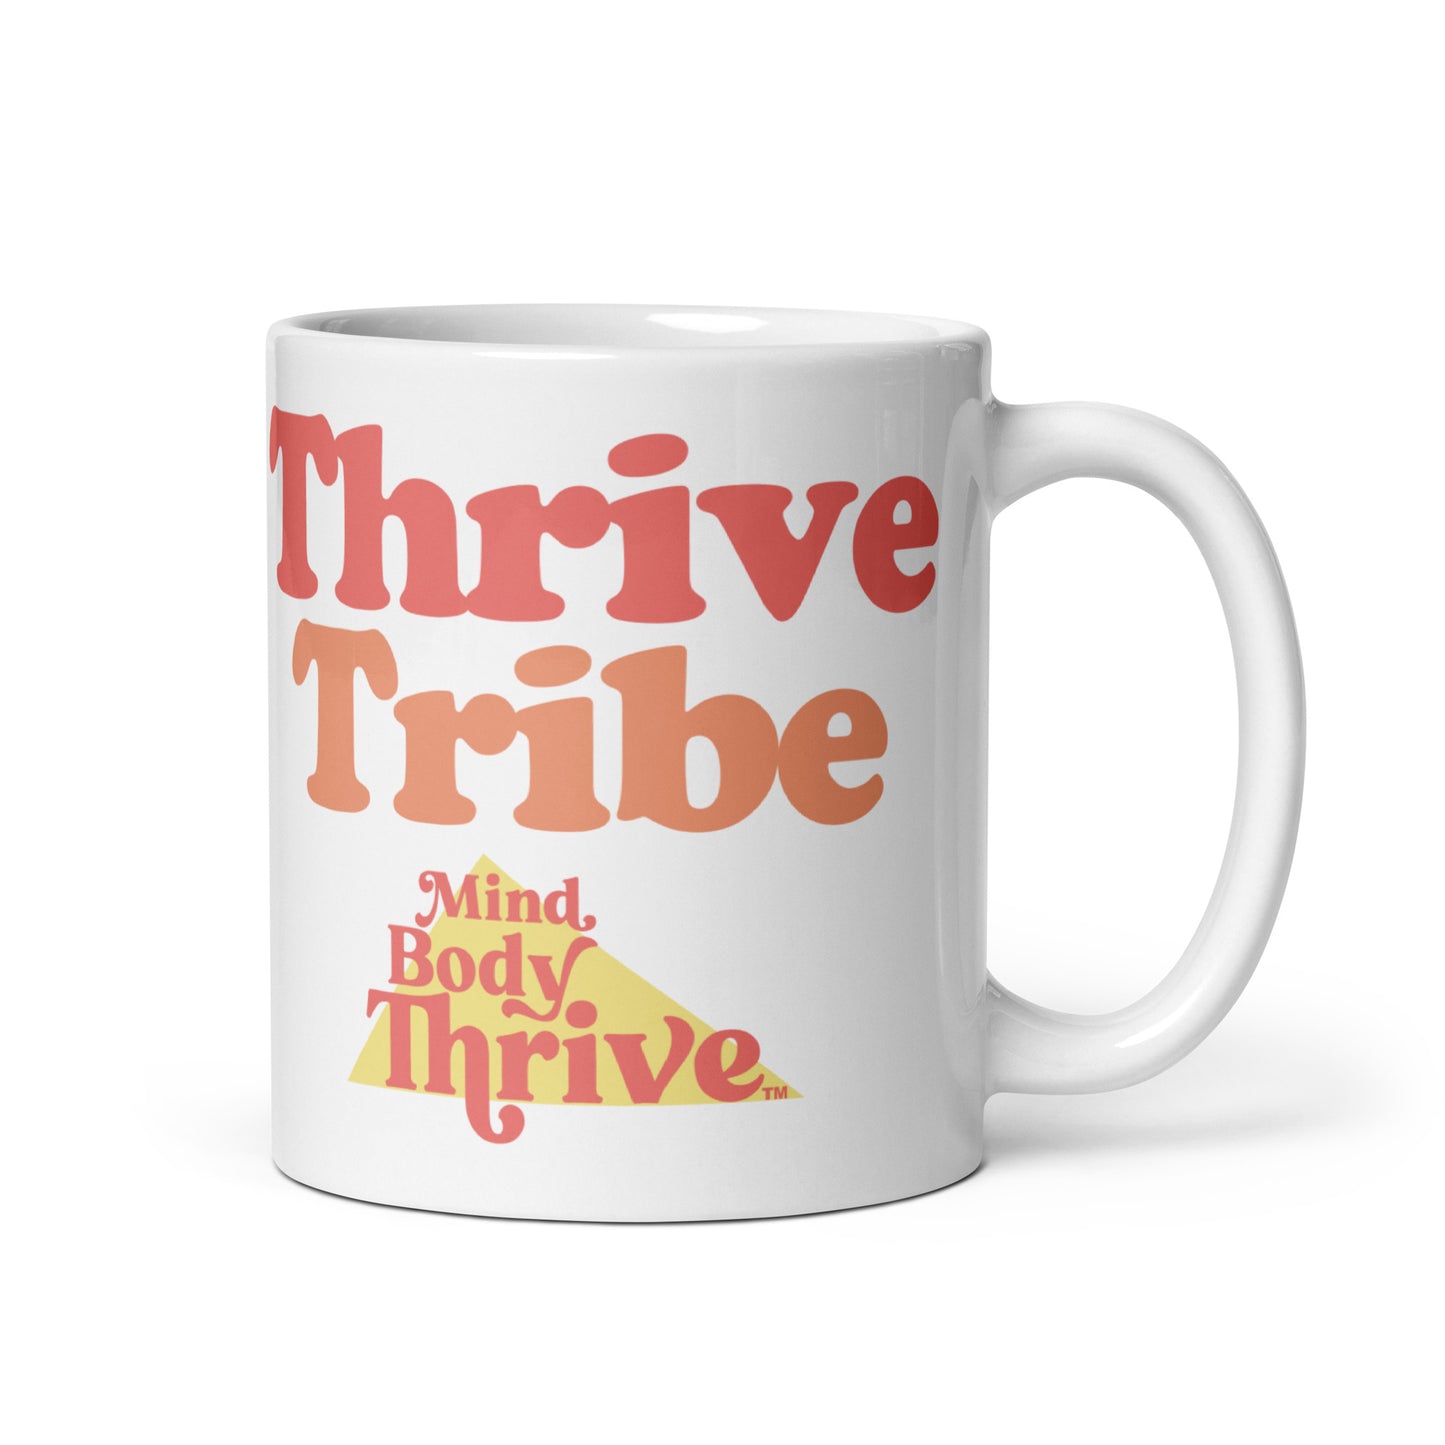 Thrive Tribe White glossy mug